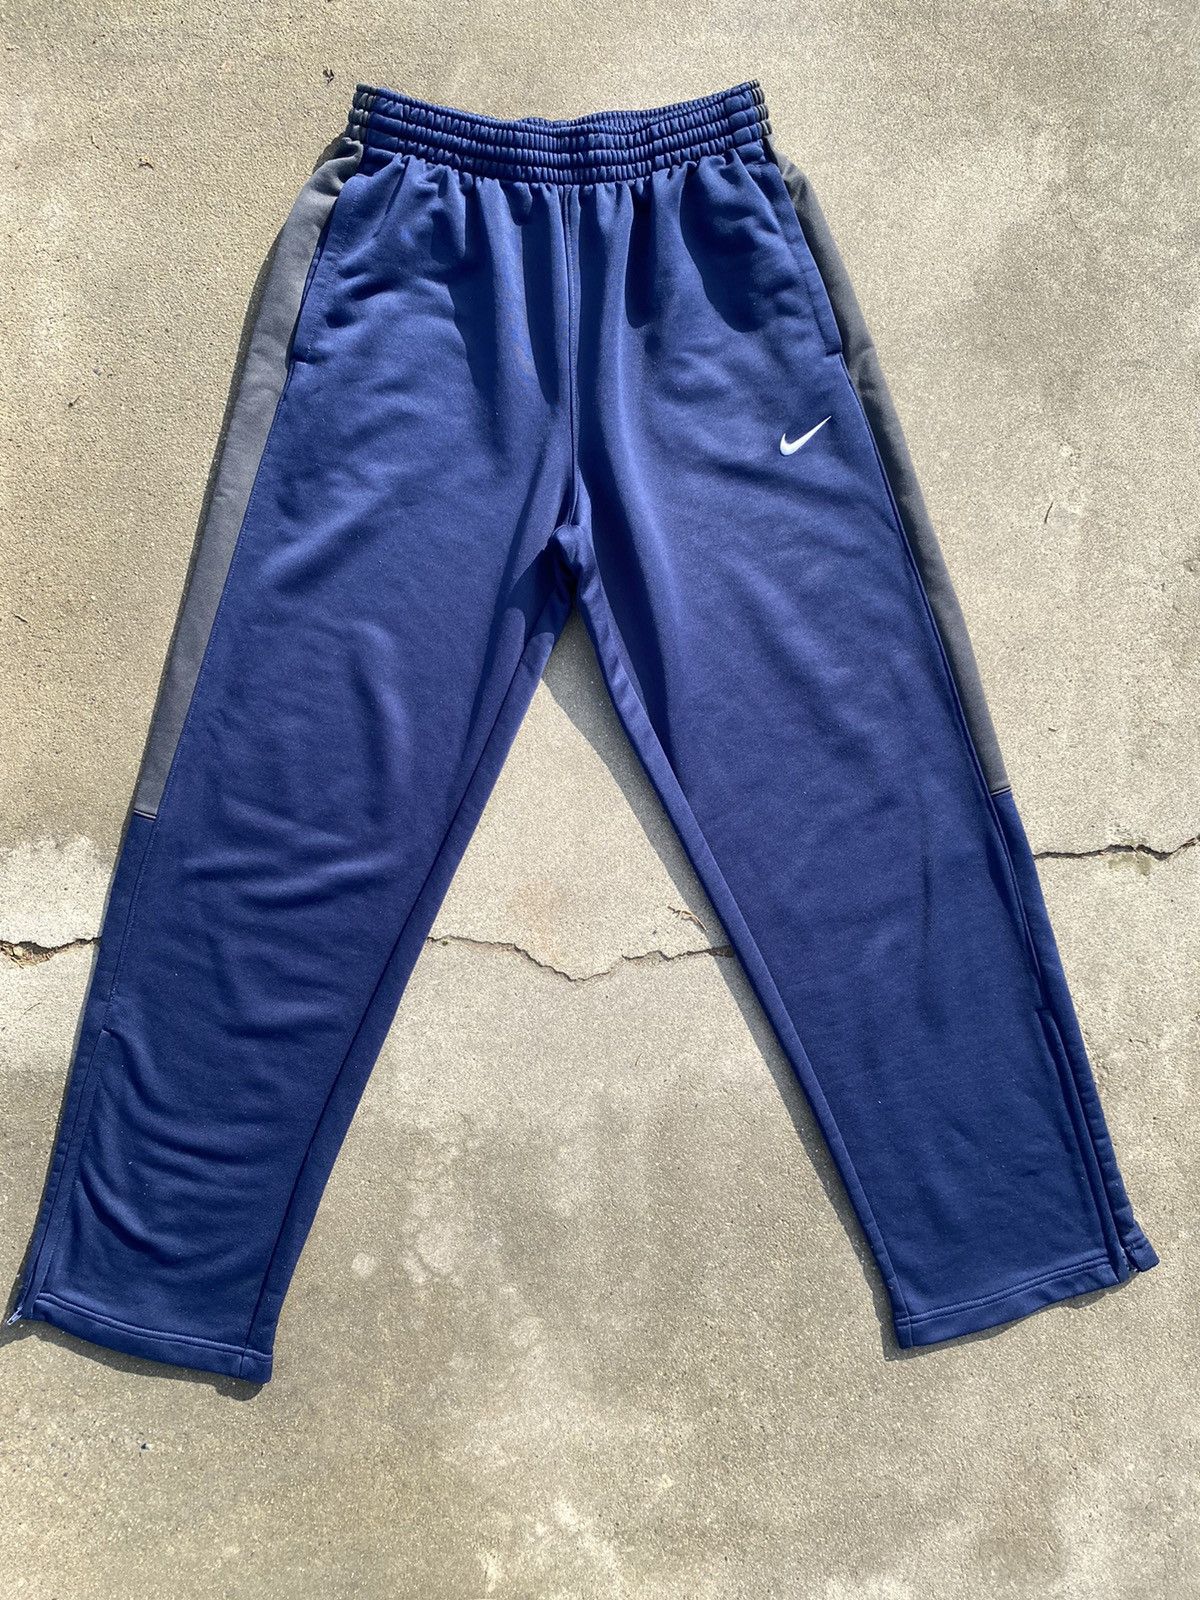 Nike Vintage Nike sweatpants | Grailed